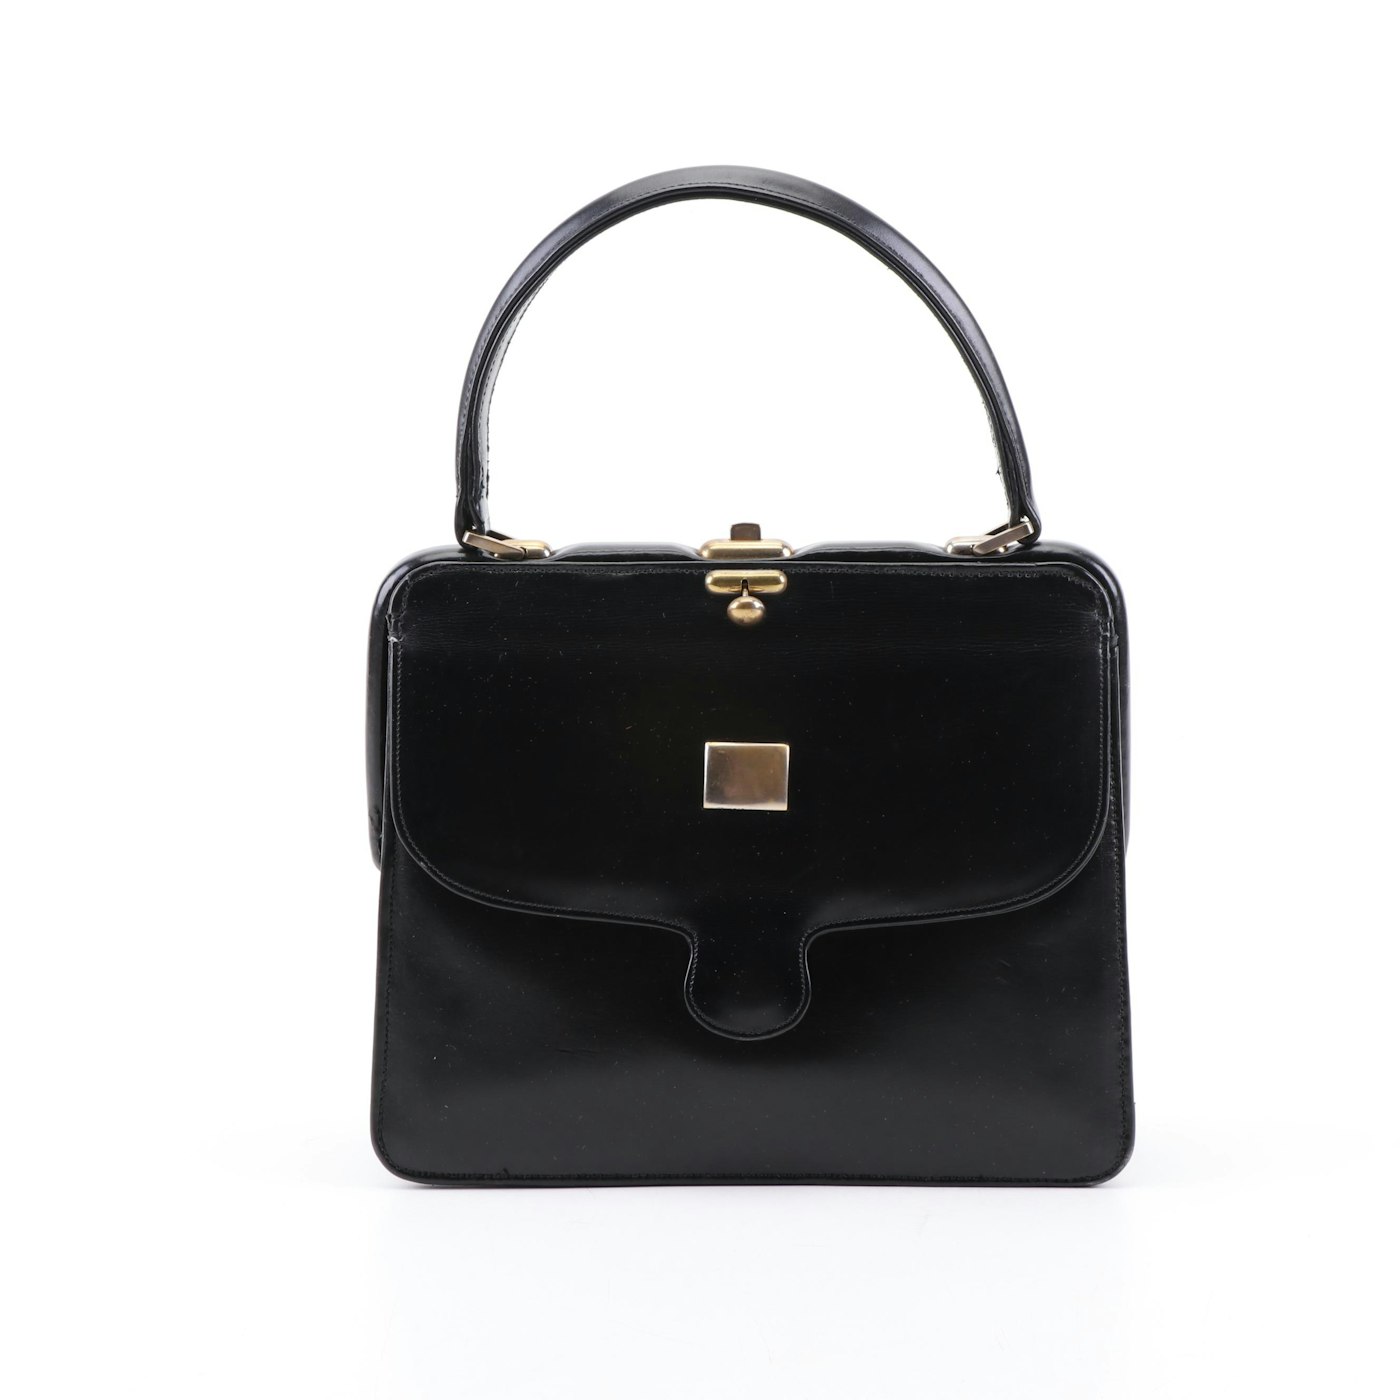 Gucci Black Leather Top Handle Bag, 1950s Vintage | EBTH